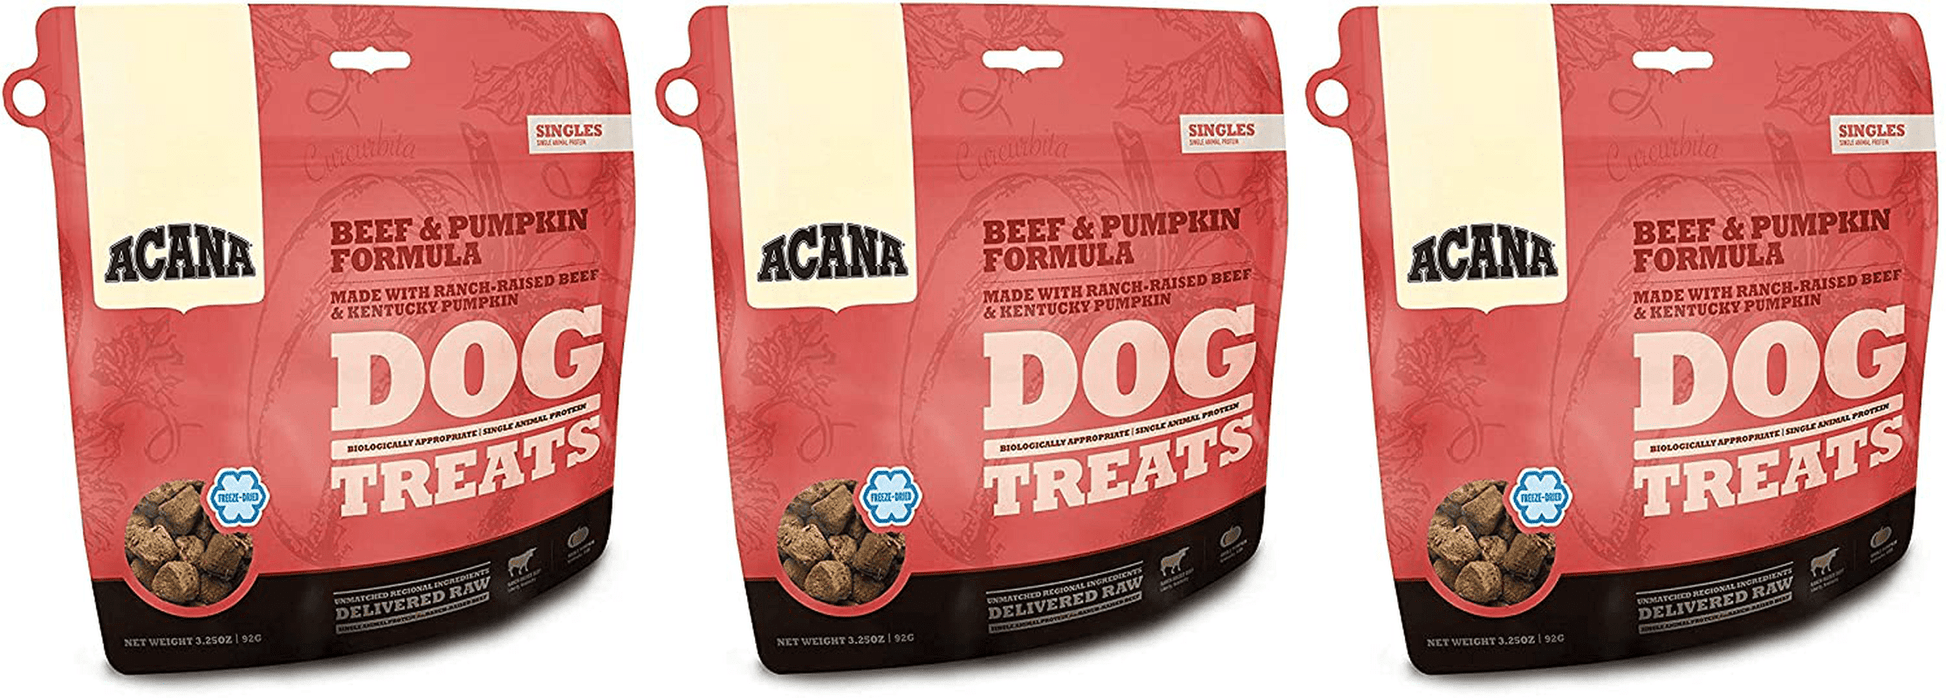 ACANA 3 Pack of Beef and Pumpkin Dog Treats, 3.25 Ounces Each, Freeze-Dried Raw Single-Source Protein Animals & Pet Supplies > Pet Supplies > Dog Supplies > Dog Treats ACANA   